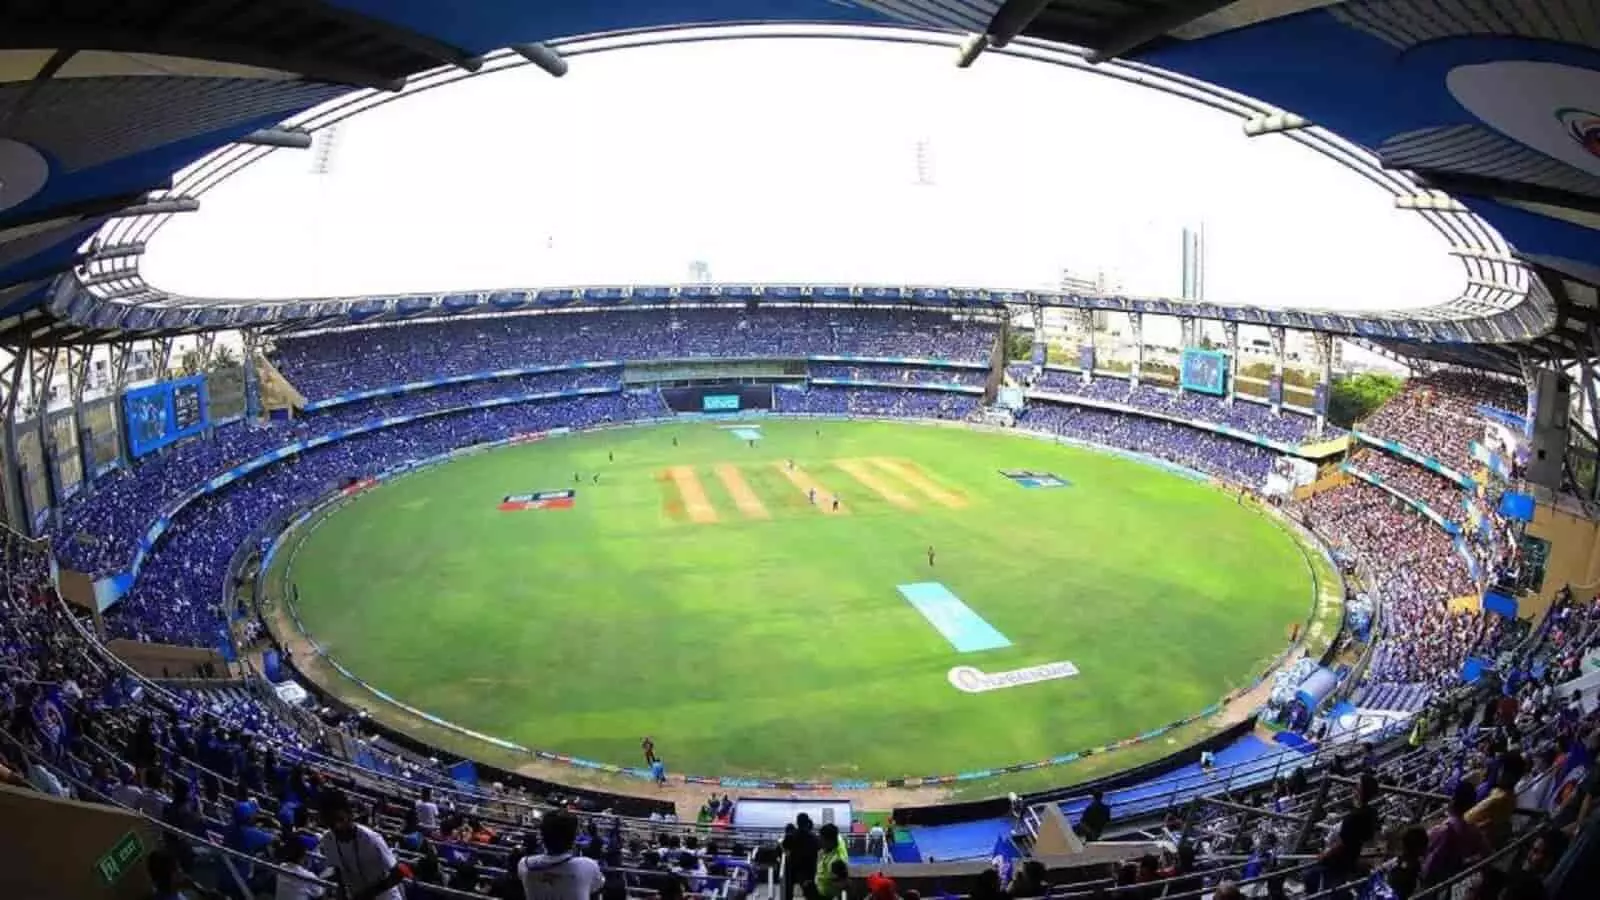 वानखेड़े स्टेडियम पिच रिपोर्ट, मौसम और आंकड़े | Wankhede Stadium Pitch Report, Weather Forecast, Records In Hindi